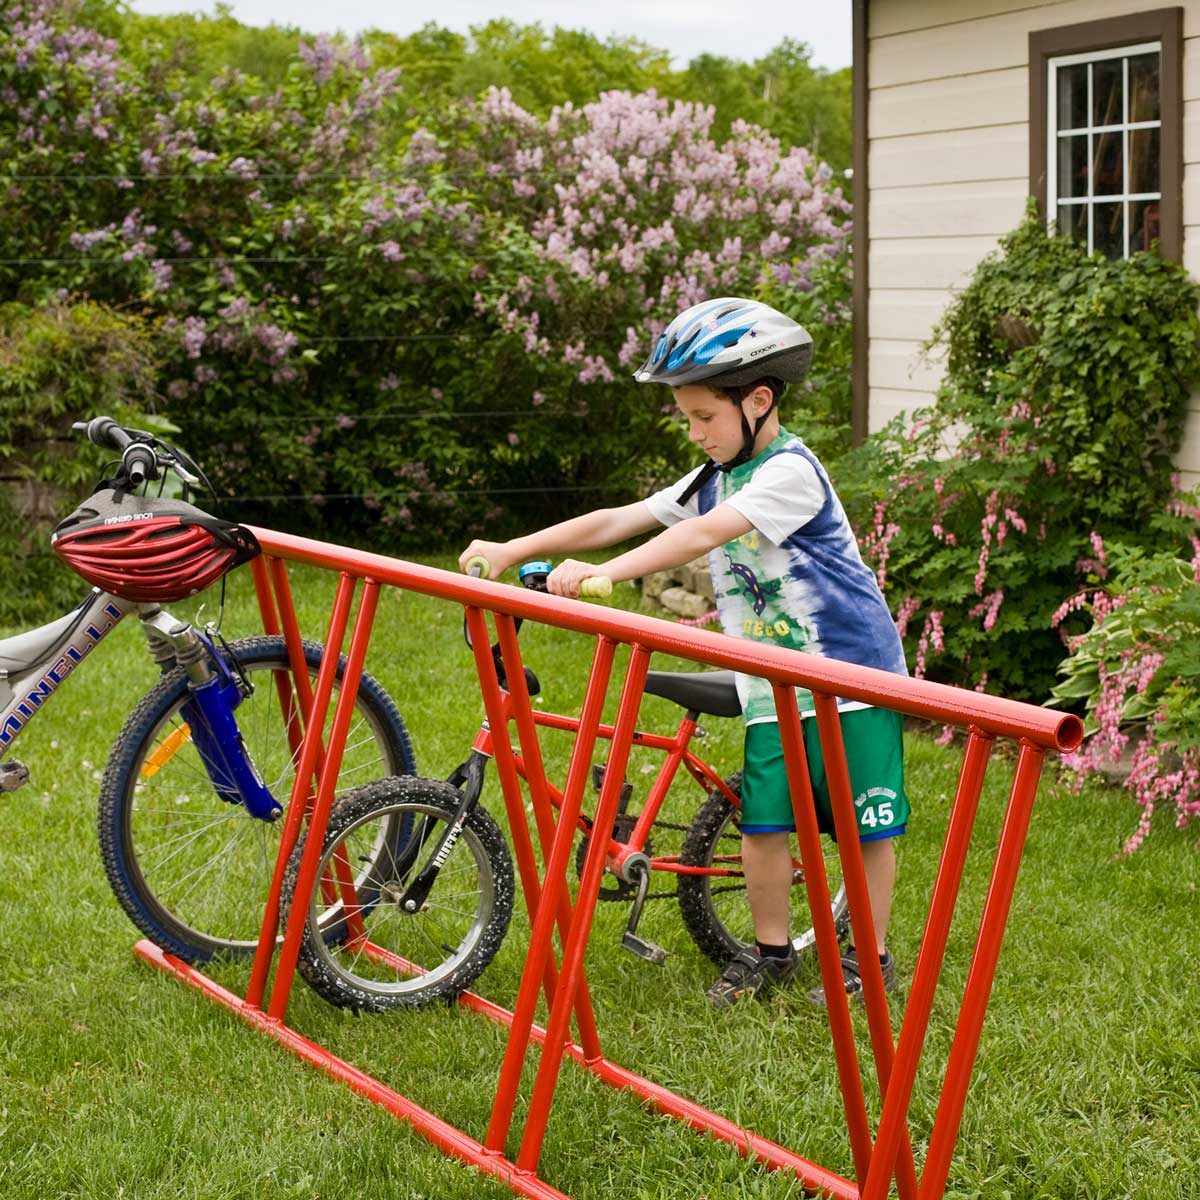 How to Make a Simple Bike Rack (DIY)